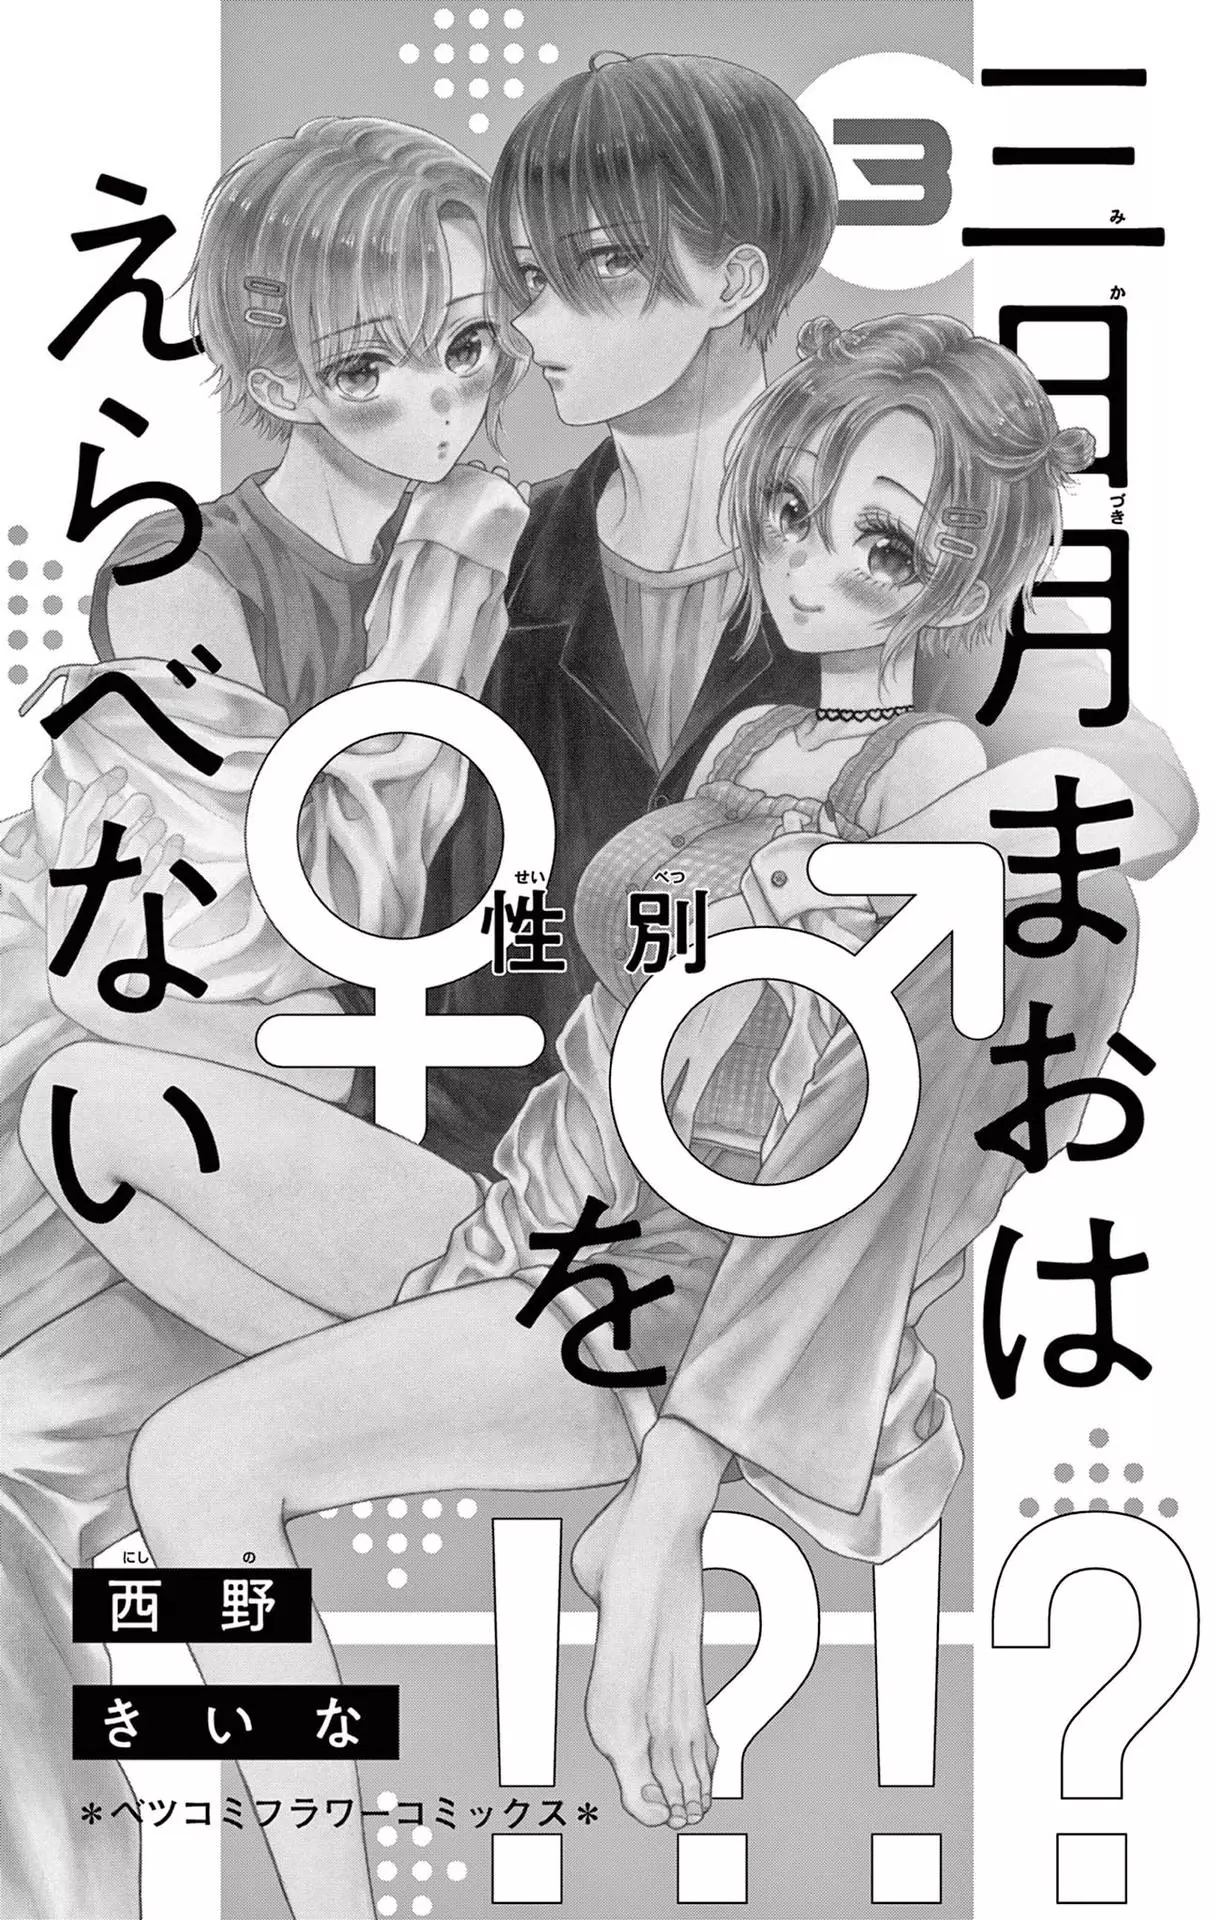 Mikazuki Mao Can't Choose A Gender - 9 page 2-c61e4c83